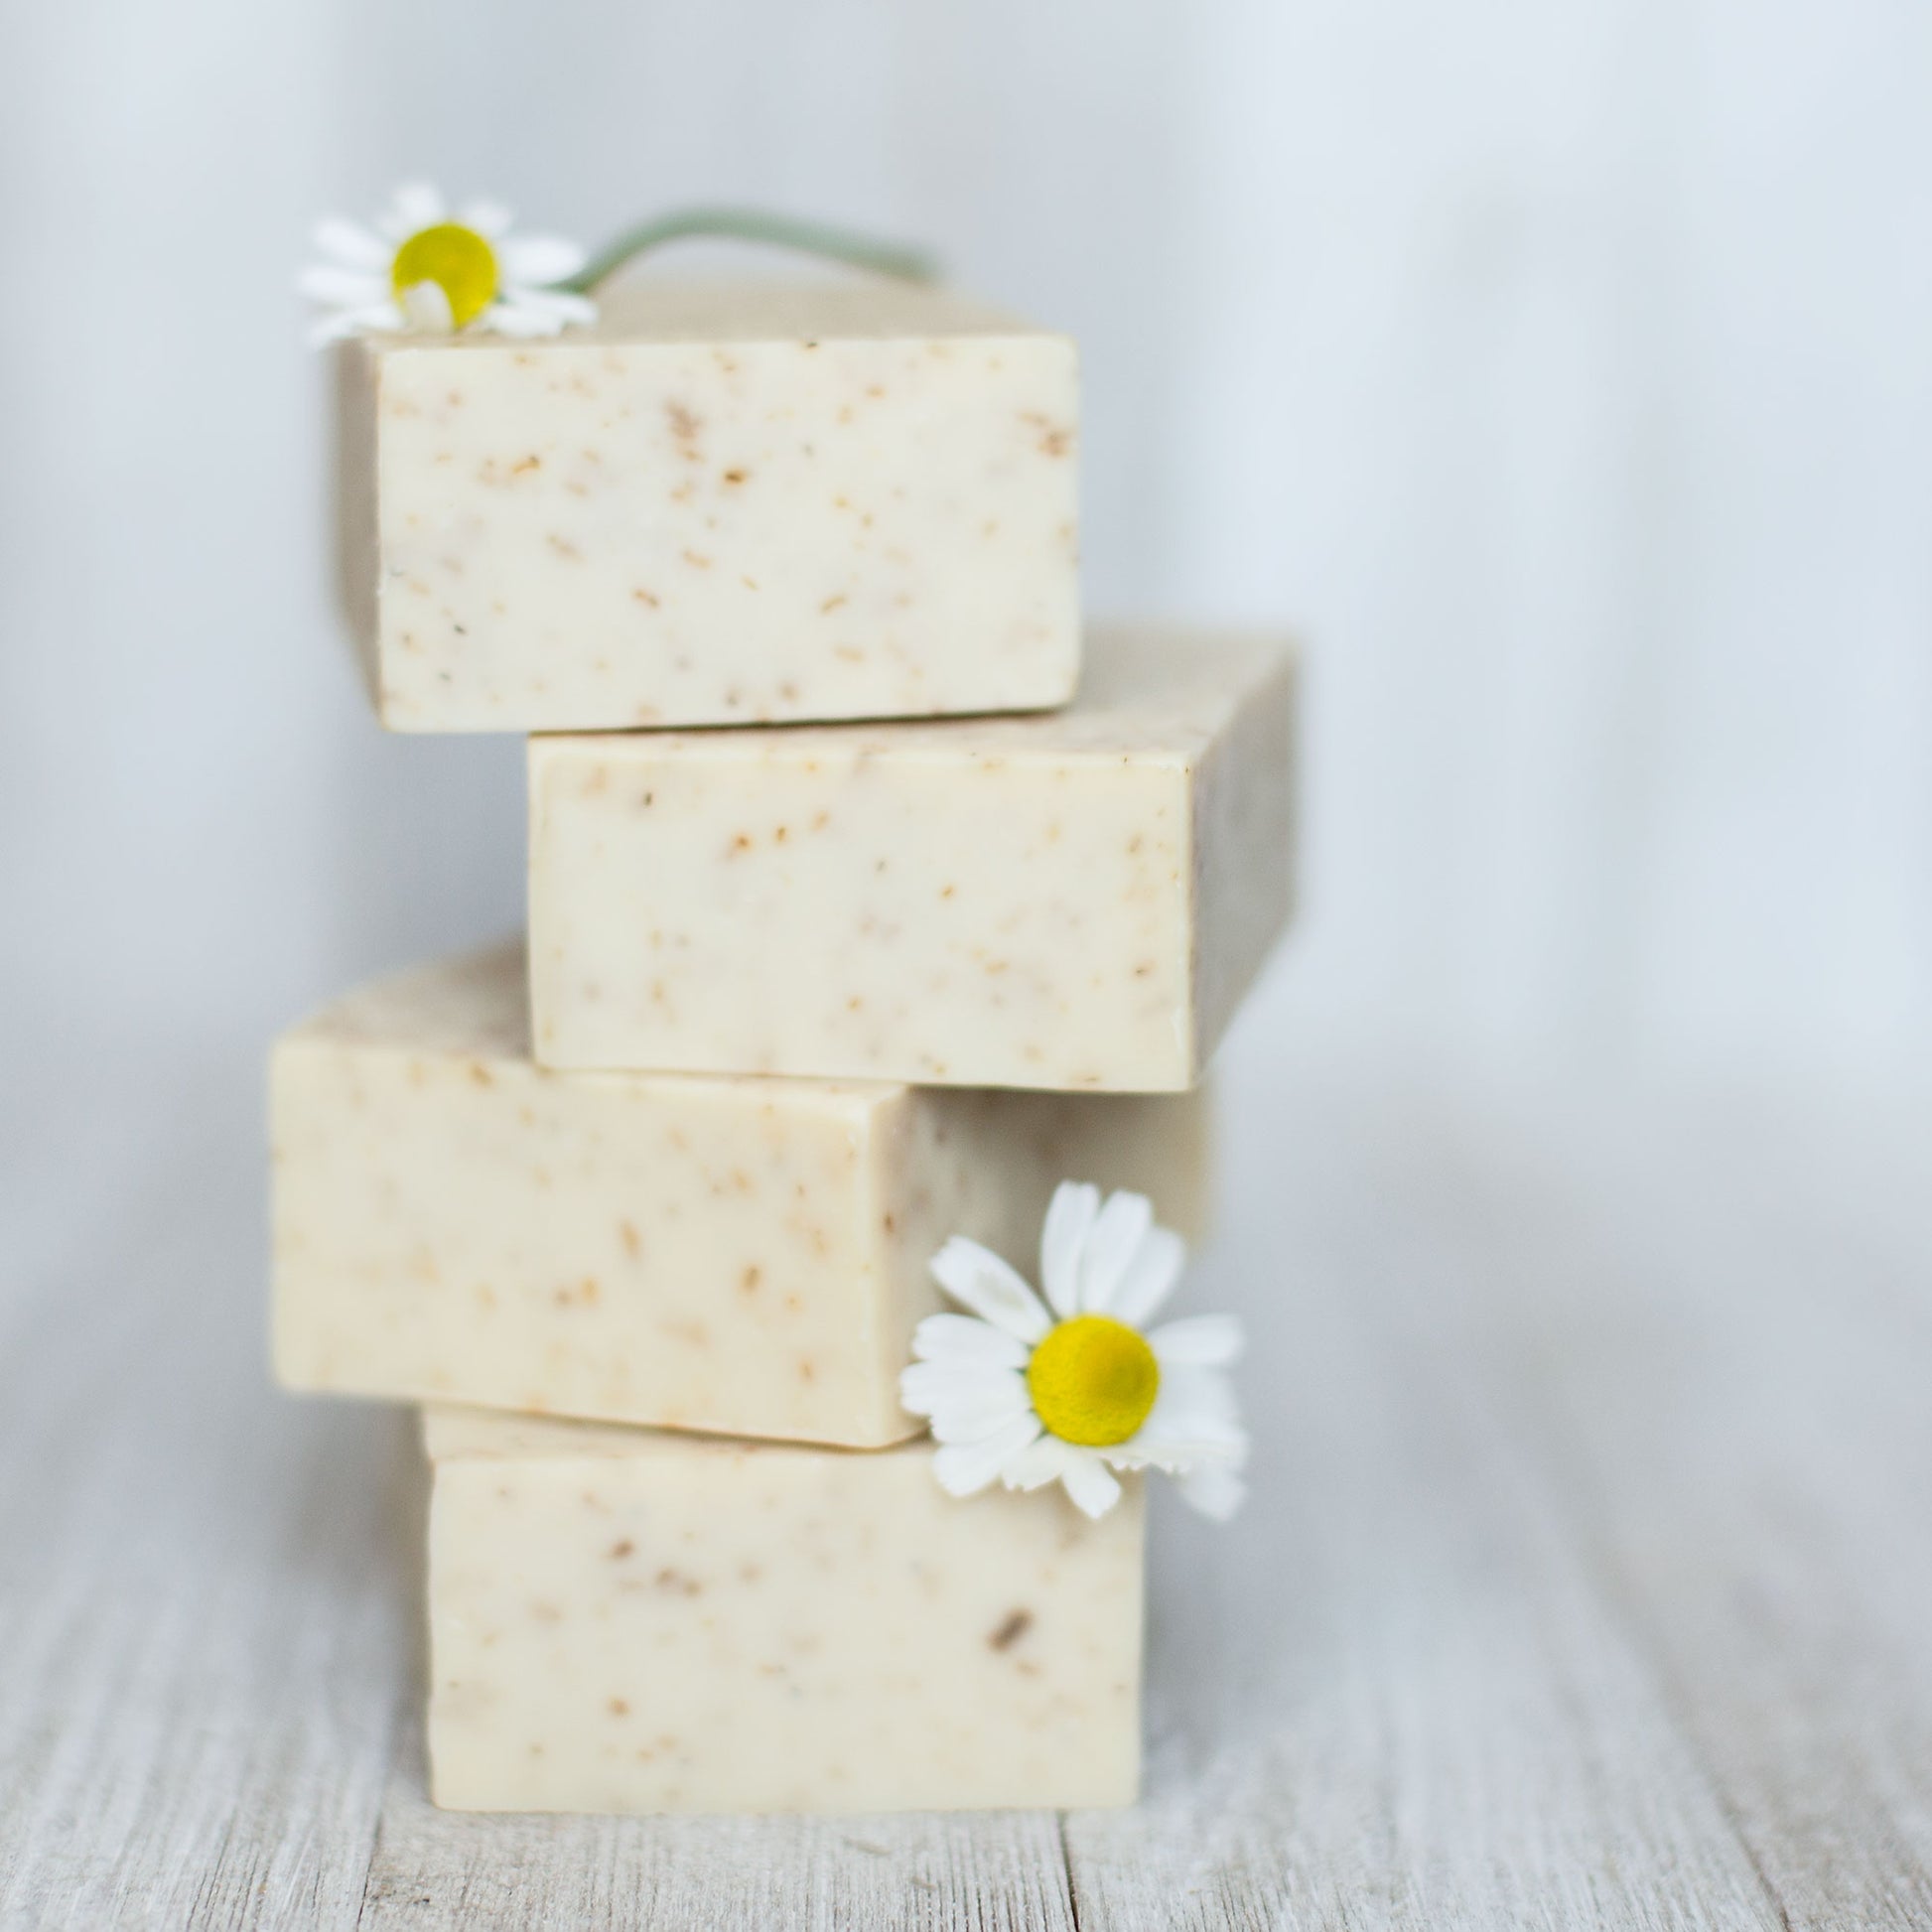 Chamomile Natural Soap Bar Unscented Sensitive Skin Soap